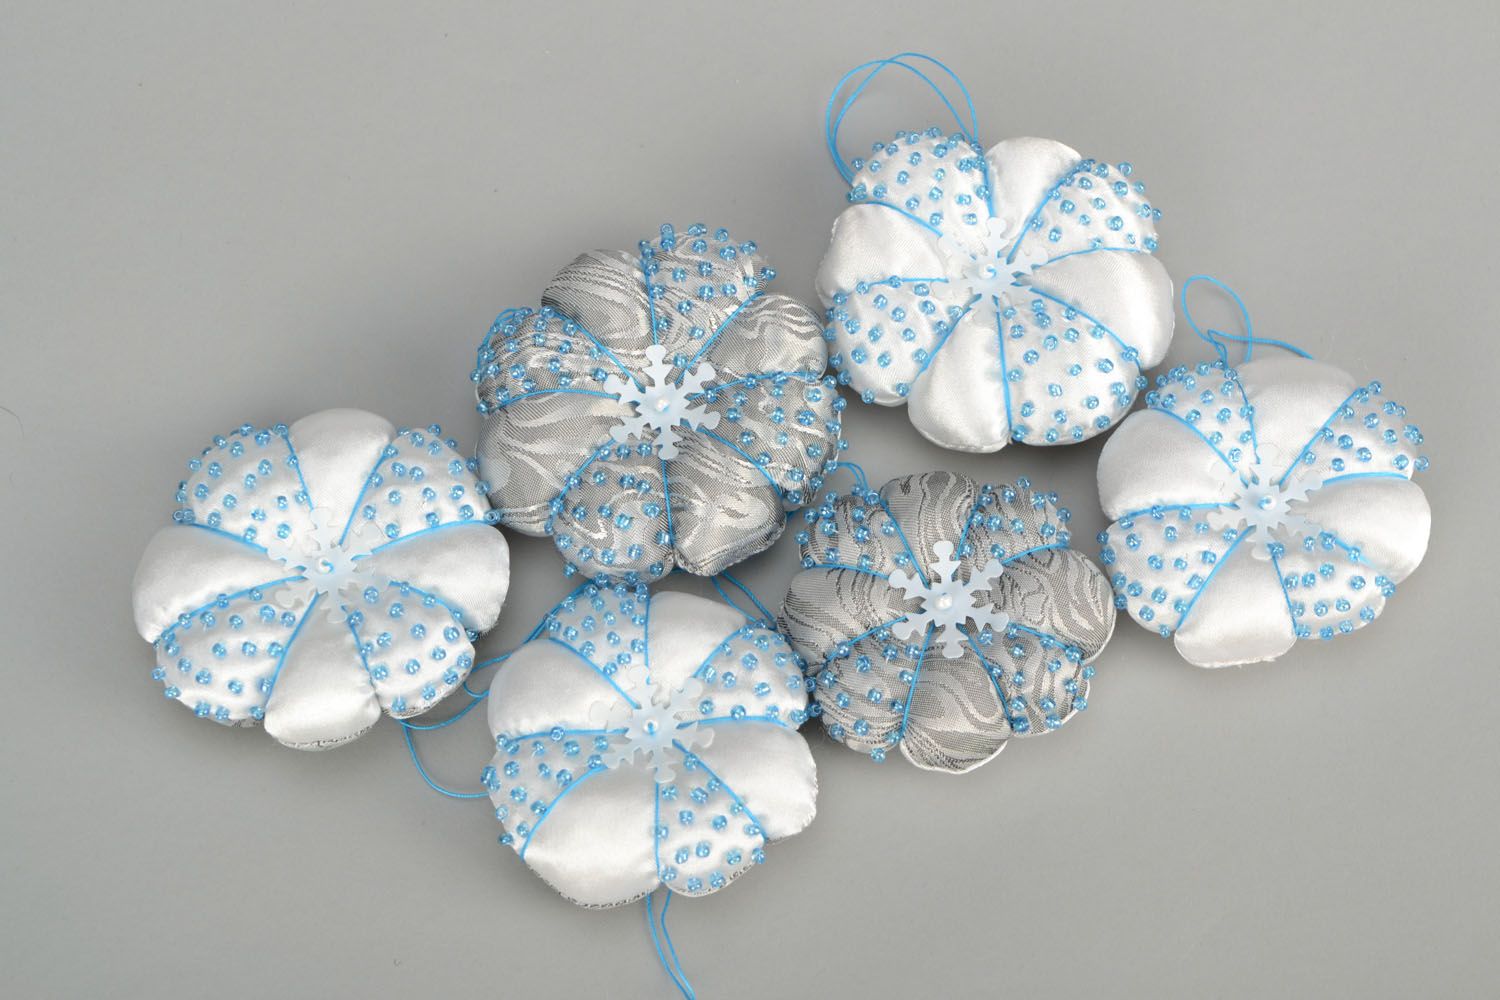 Adornos navideños textiles “Copos de nieve” foto 3